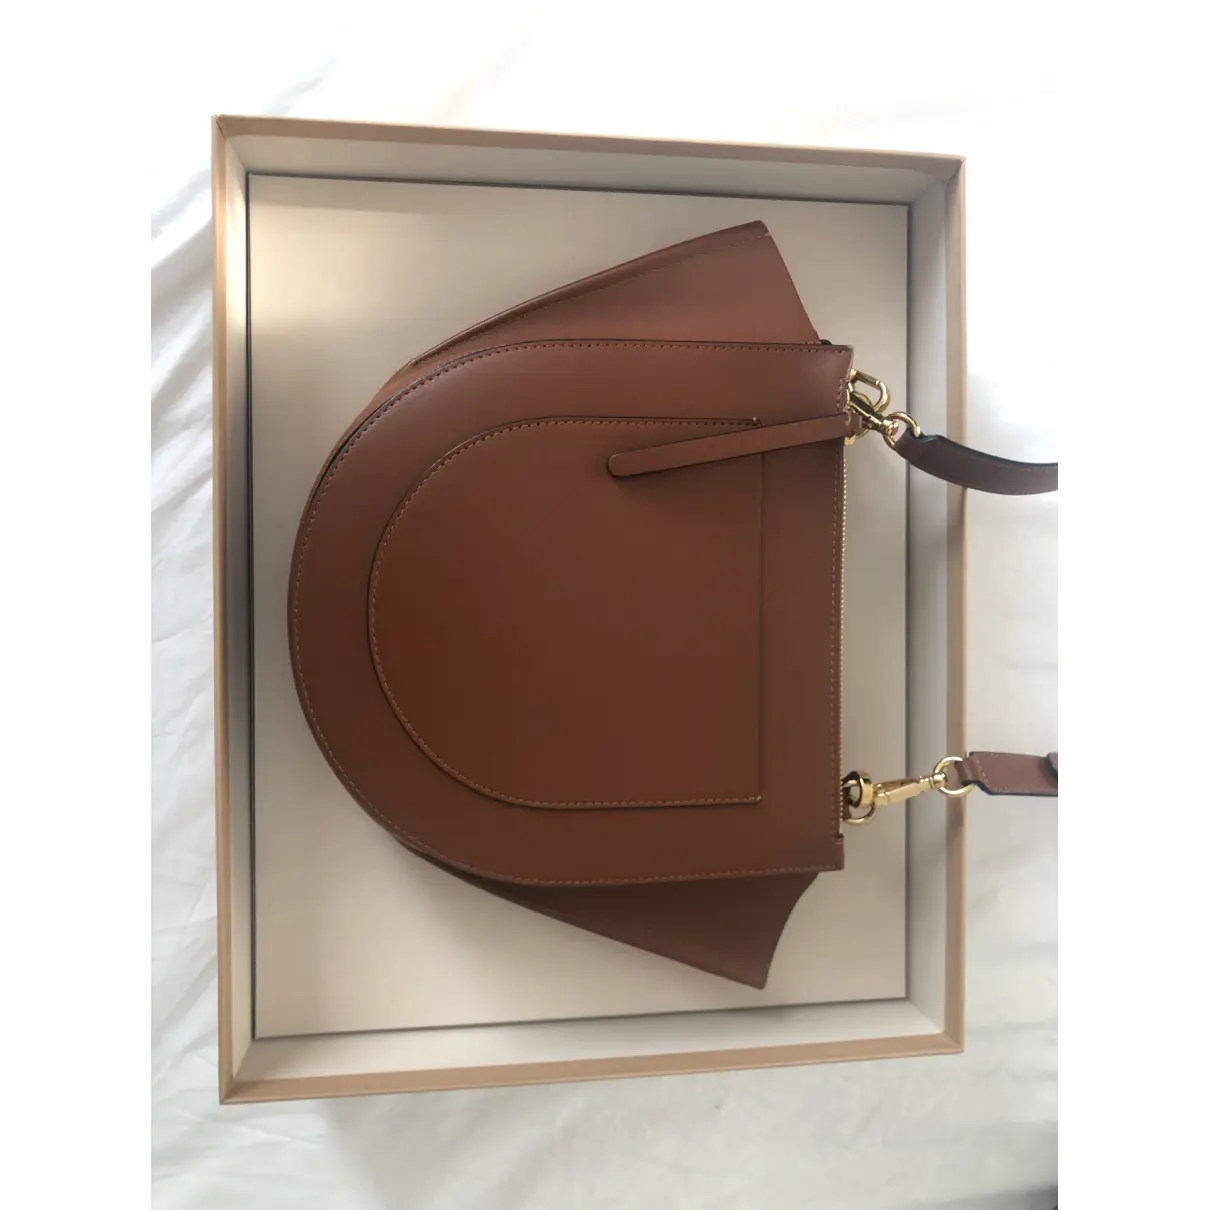 Buy Wandler Hortensia leather handbag online